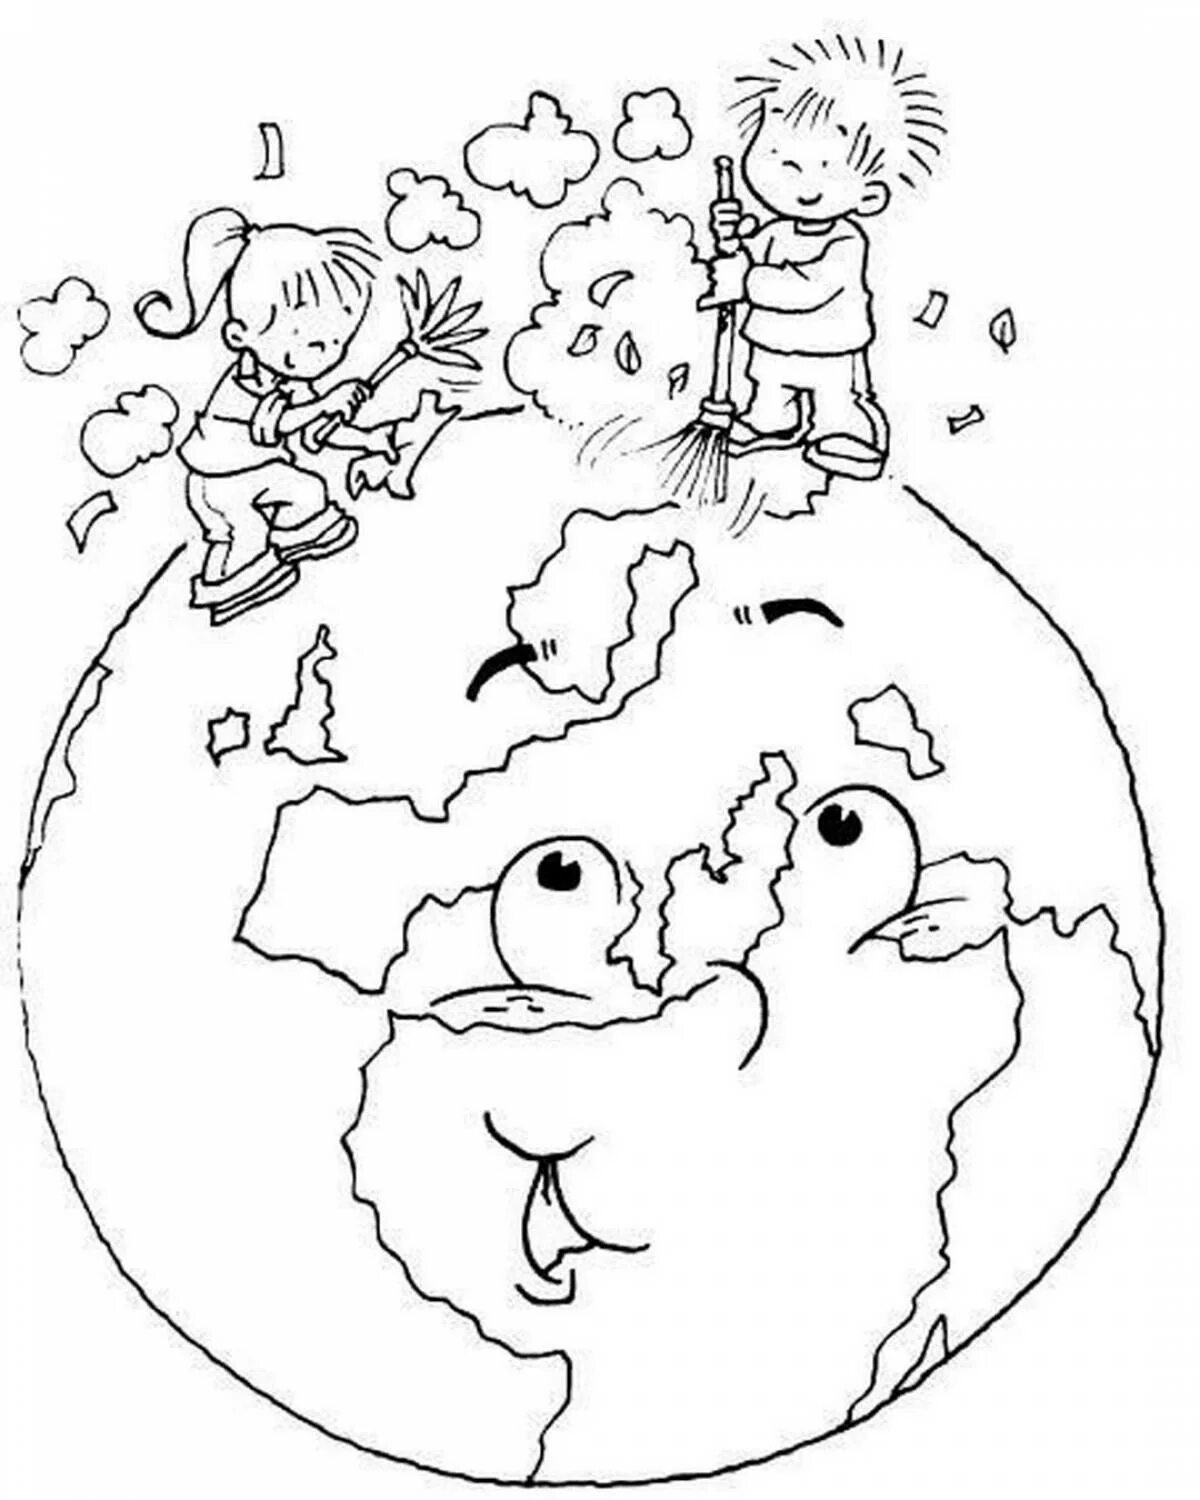 Планета земля раскраска для детей 5 лет. Планета земля раскраска. День земли раскраски для детей. Планета земля раскраска для детей. Планеты раскраска.